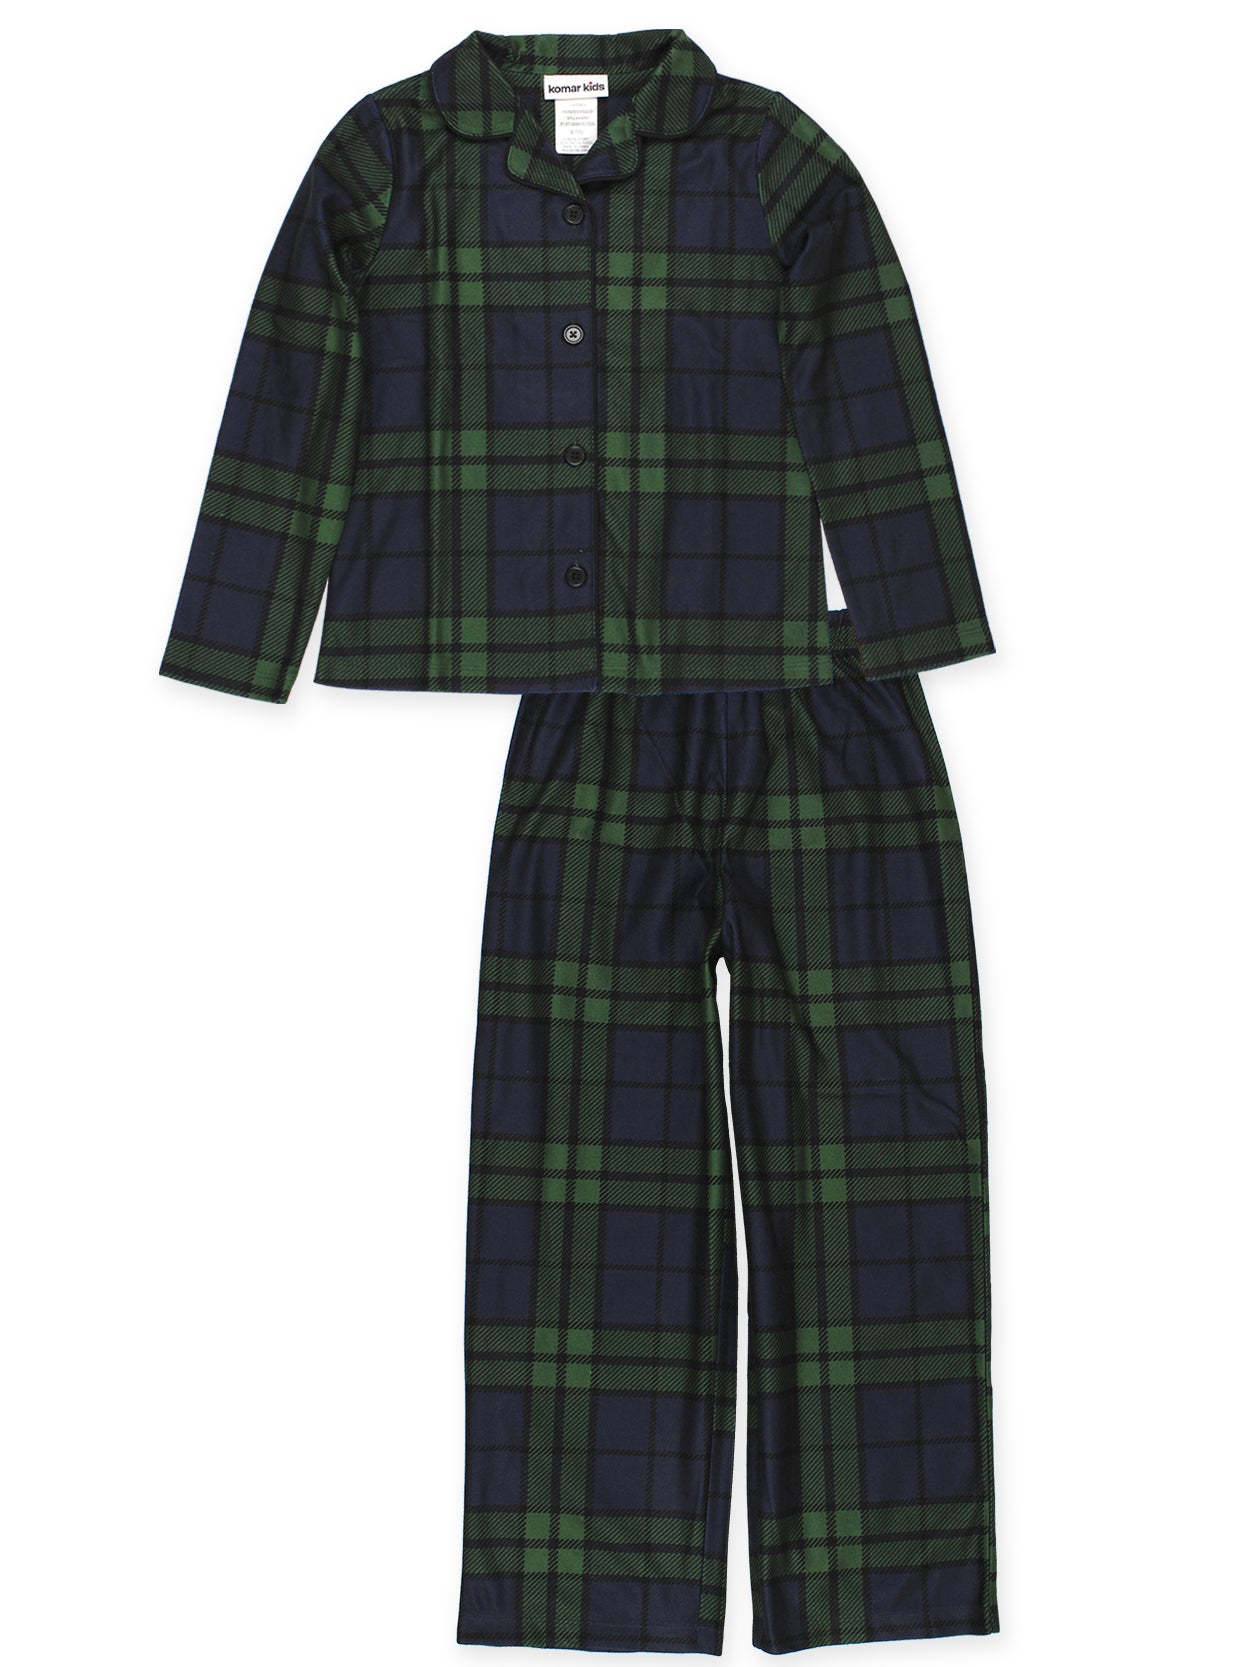 Holiday Green Plaid Coat Style Pajamas Set